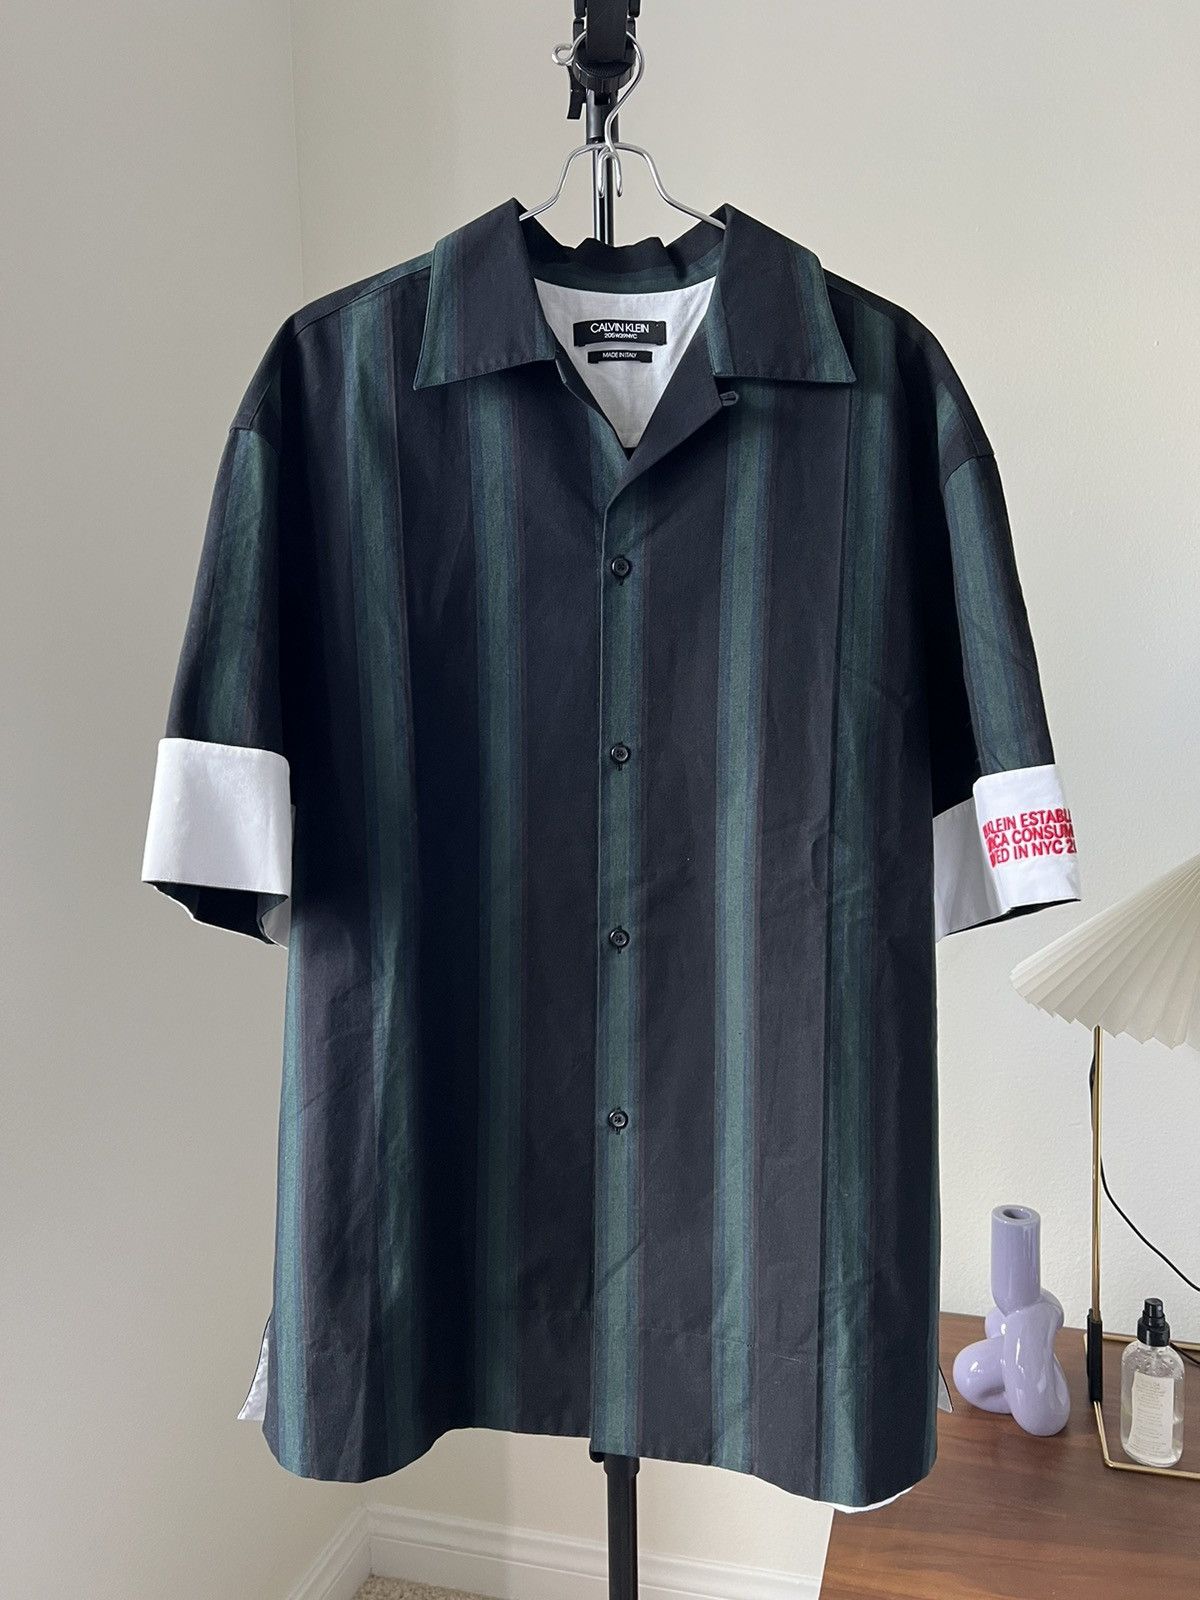 Calvin Klein 205W39NYC Faded Stripe Vacation Shirt in Dark Navy u0026 Sycamore  Marine | Grailed